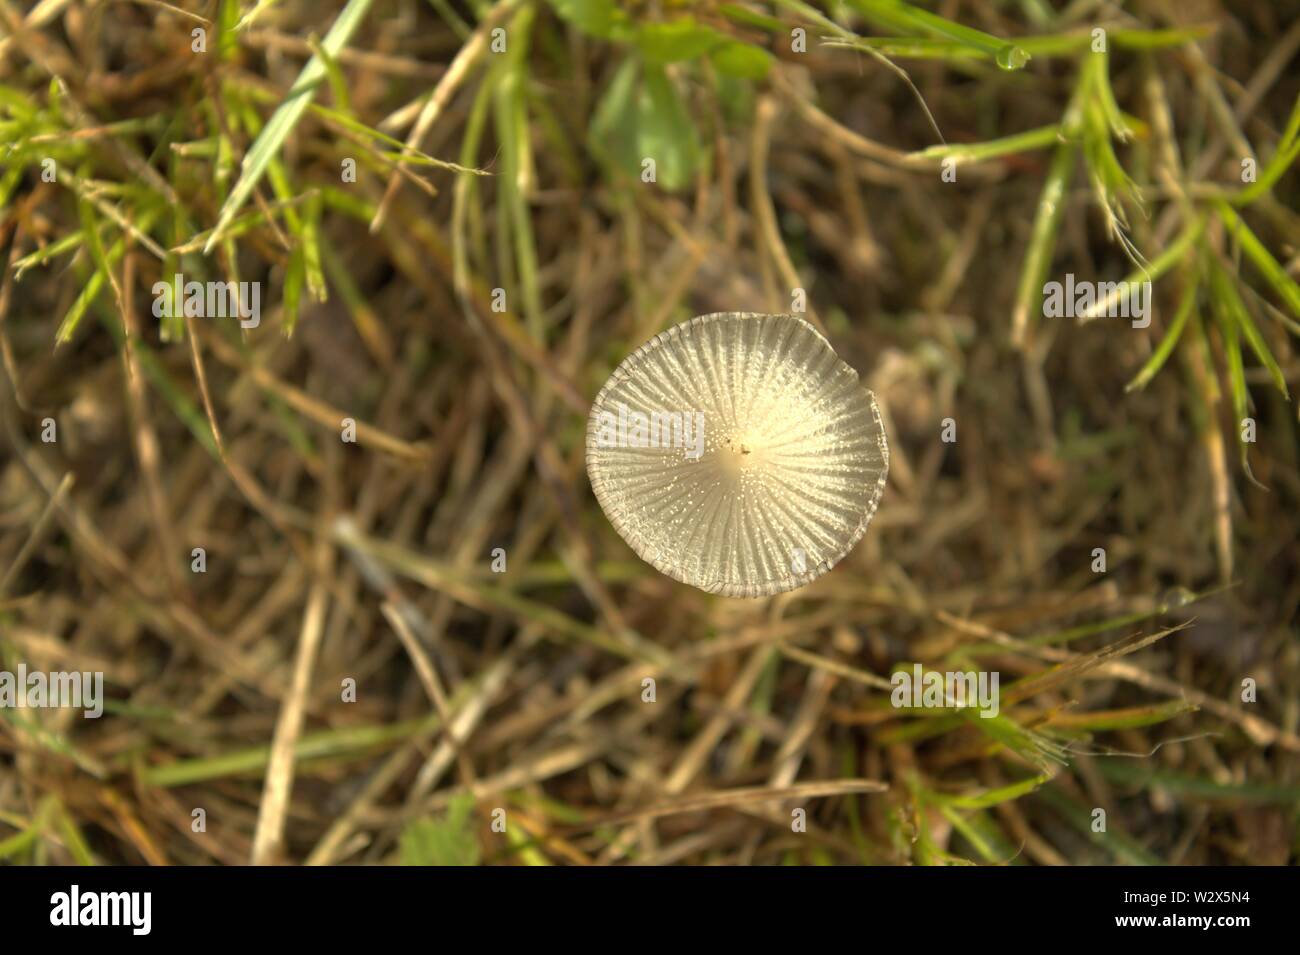 A Small Mushroom In Grass Stock Photo